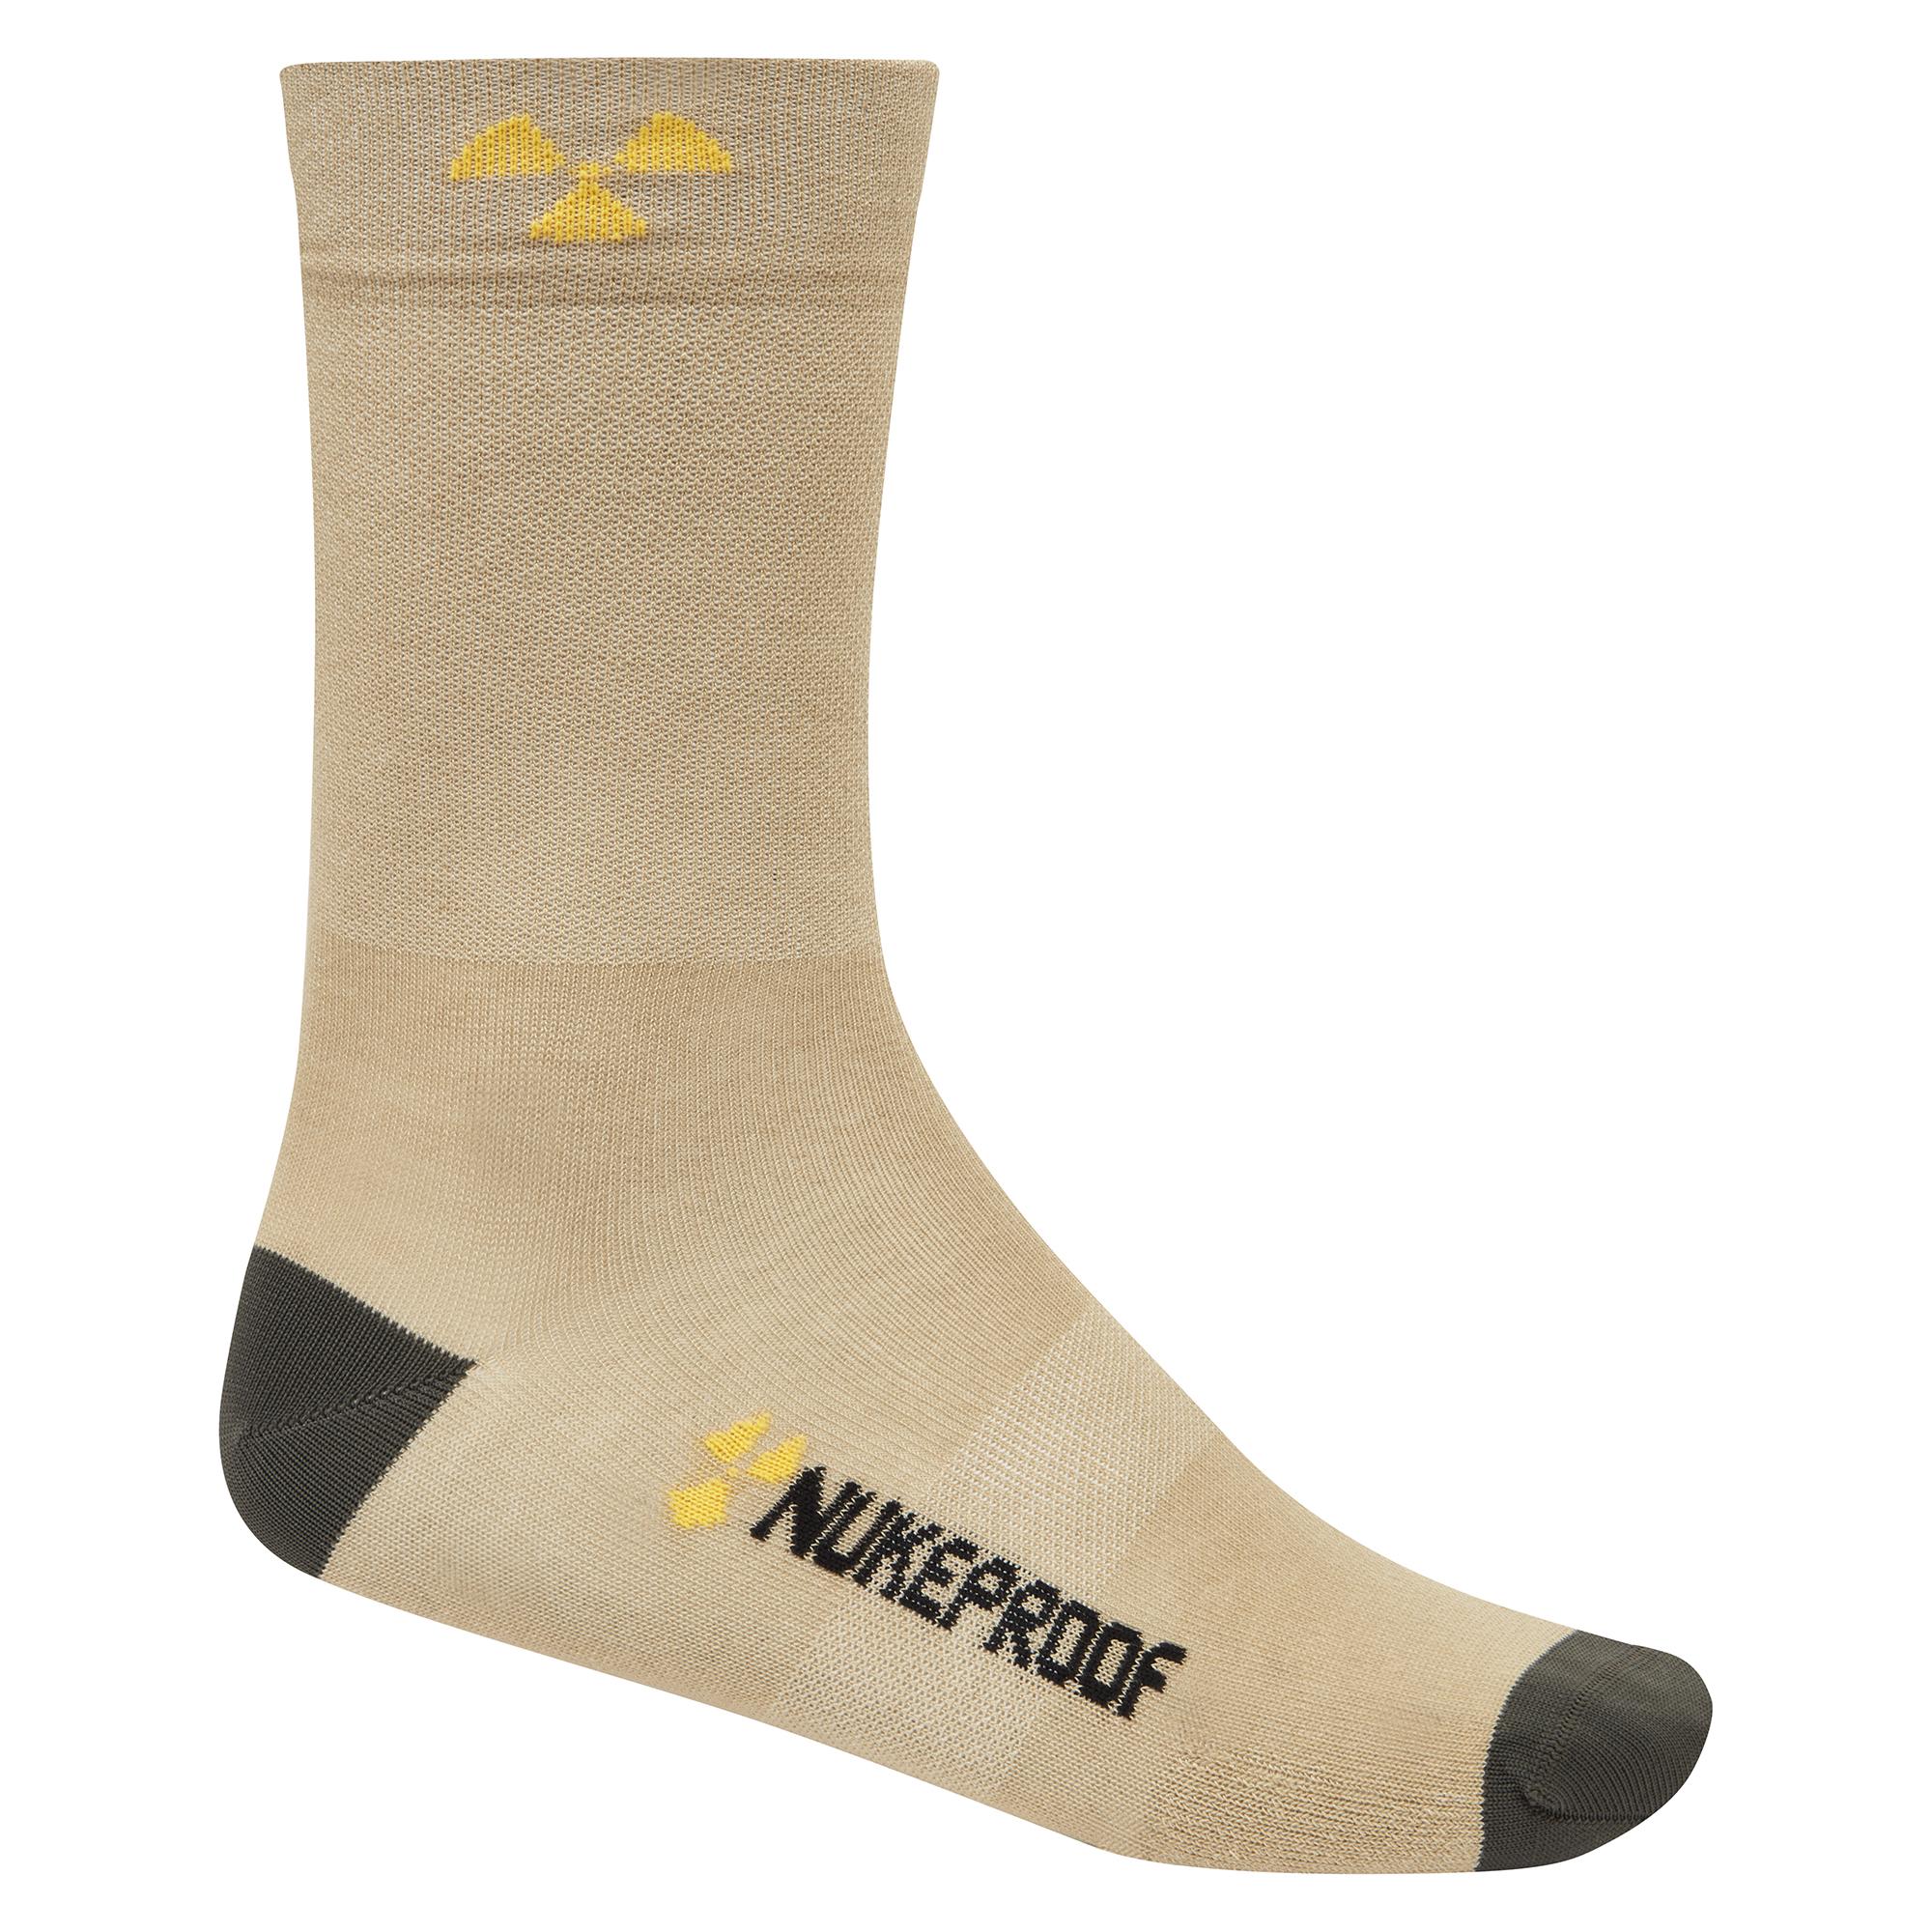 Nukeproof Outland Sock - Sand